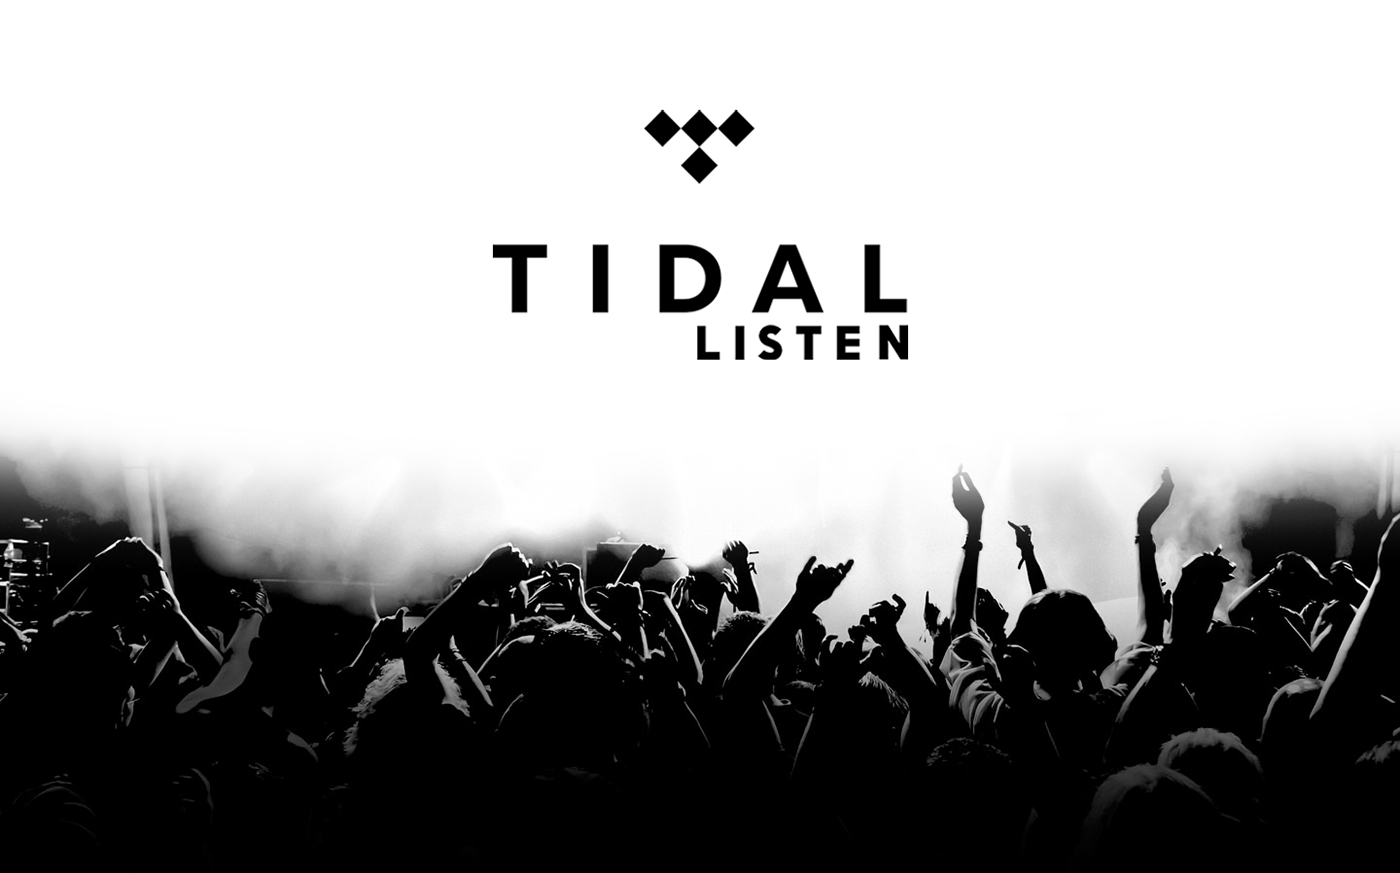 tidal Tidal Music android material design tidal redesign tidal listen free tidal Music service Xperia Z5 Nexus 5X tidal ui selena gomez ellie goulding tidal interface tidal concept